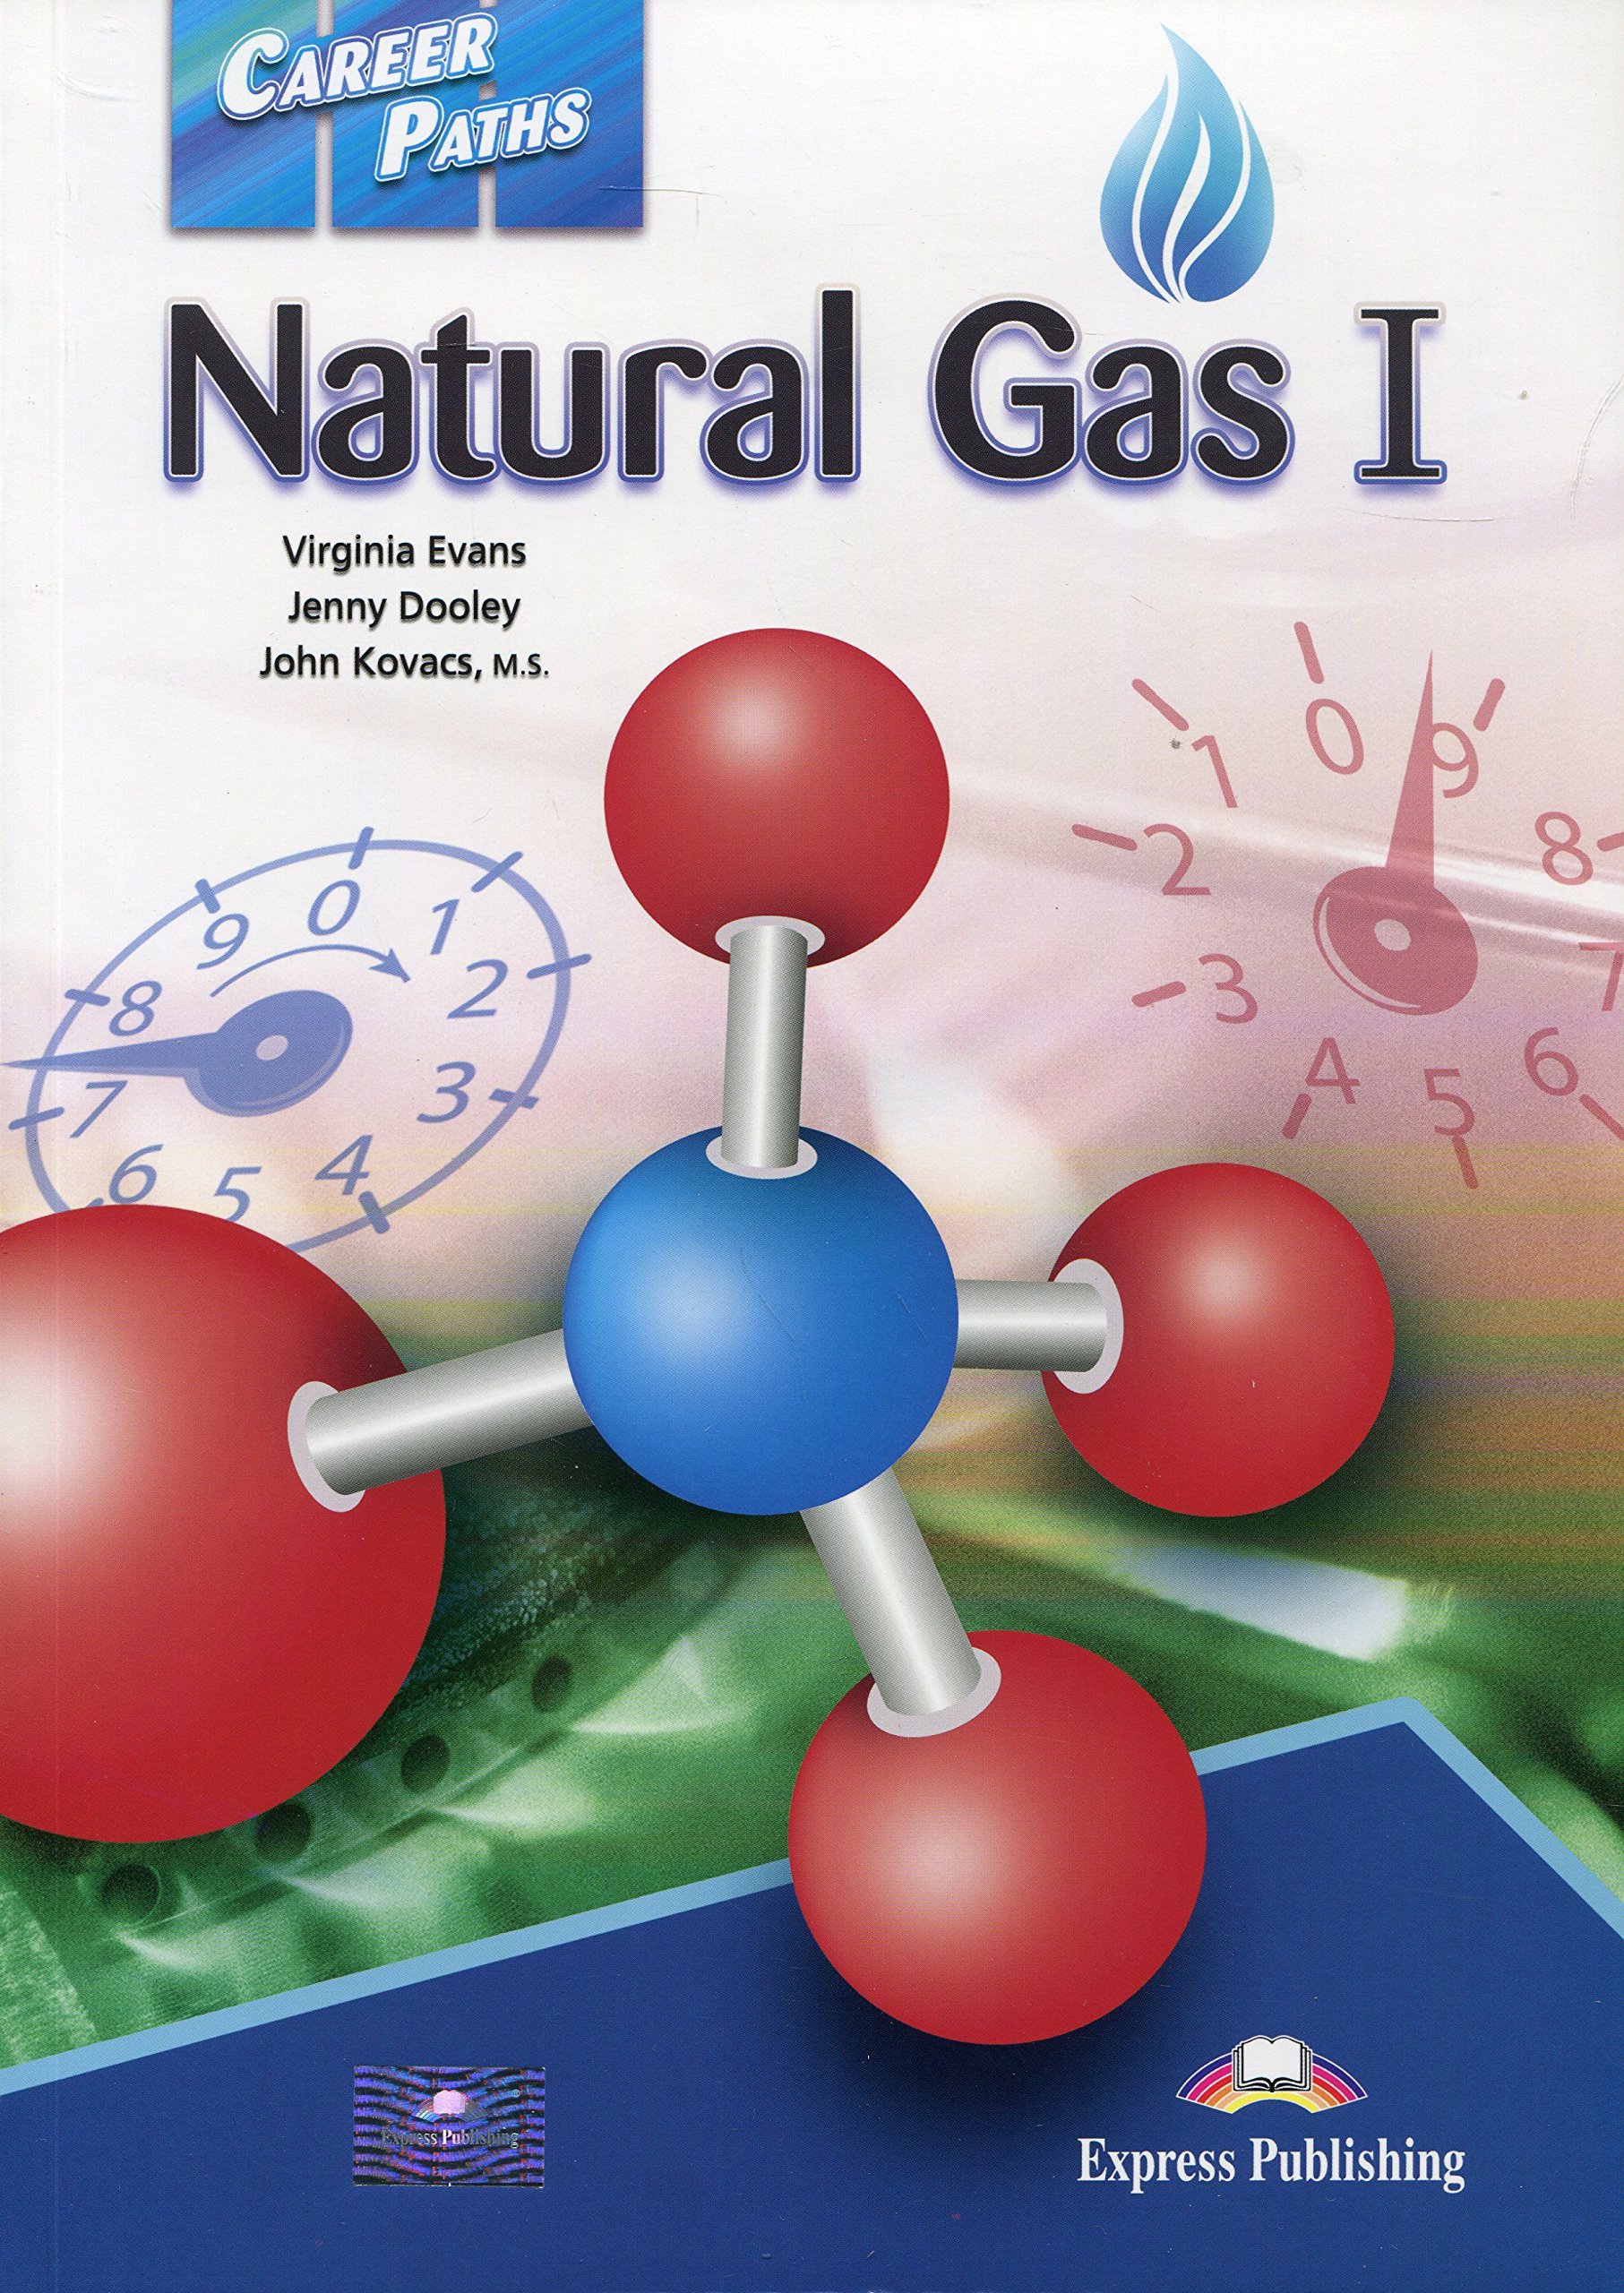 Career Paths Natural Gas 1 Student's Book + Digibook App / Учебник + онлайн-код